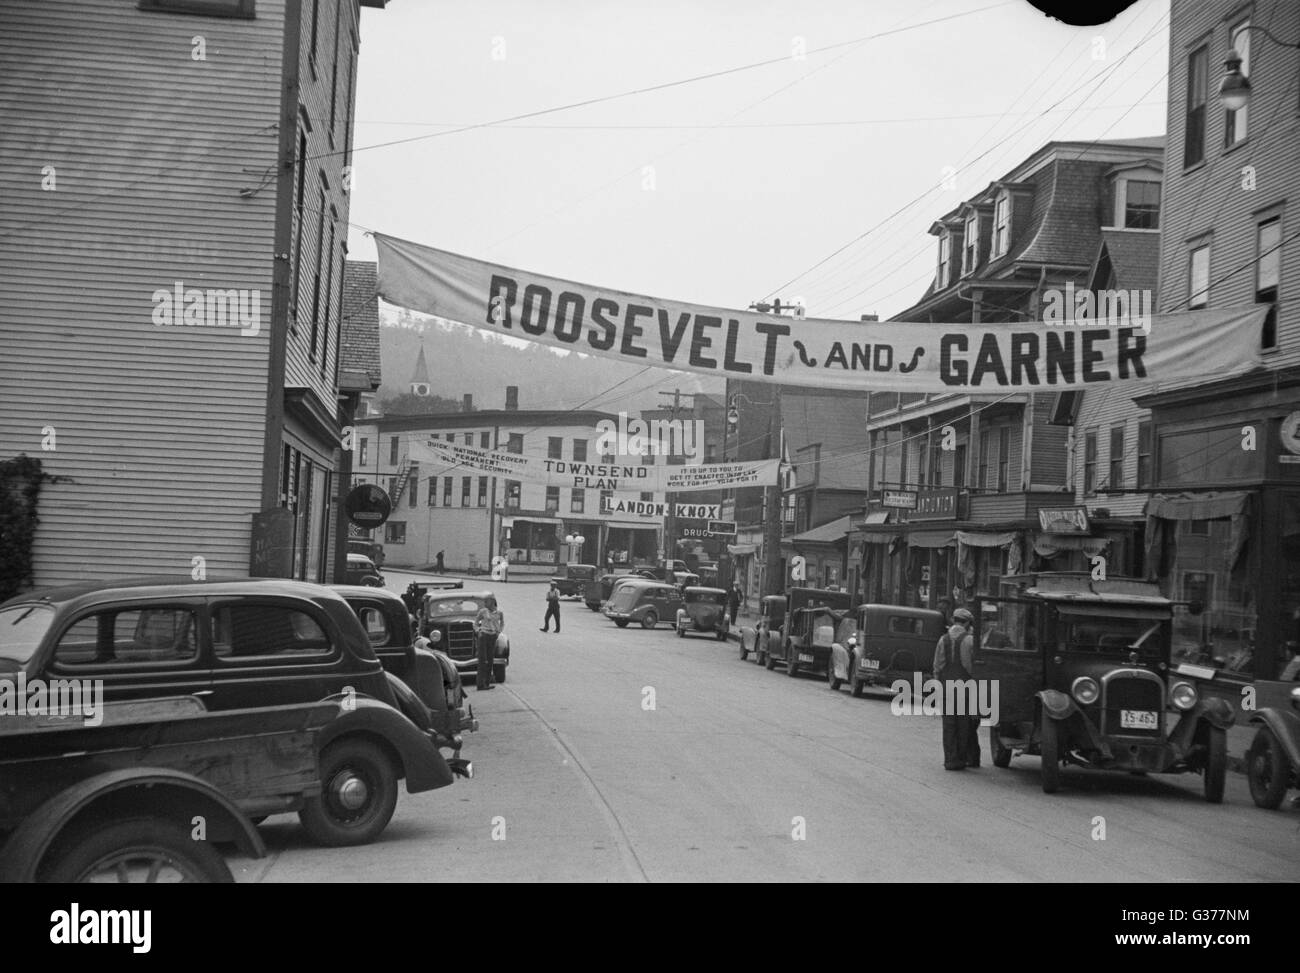 Roosevelt banner, Hardwick, Vermont Stock Photo